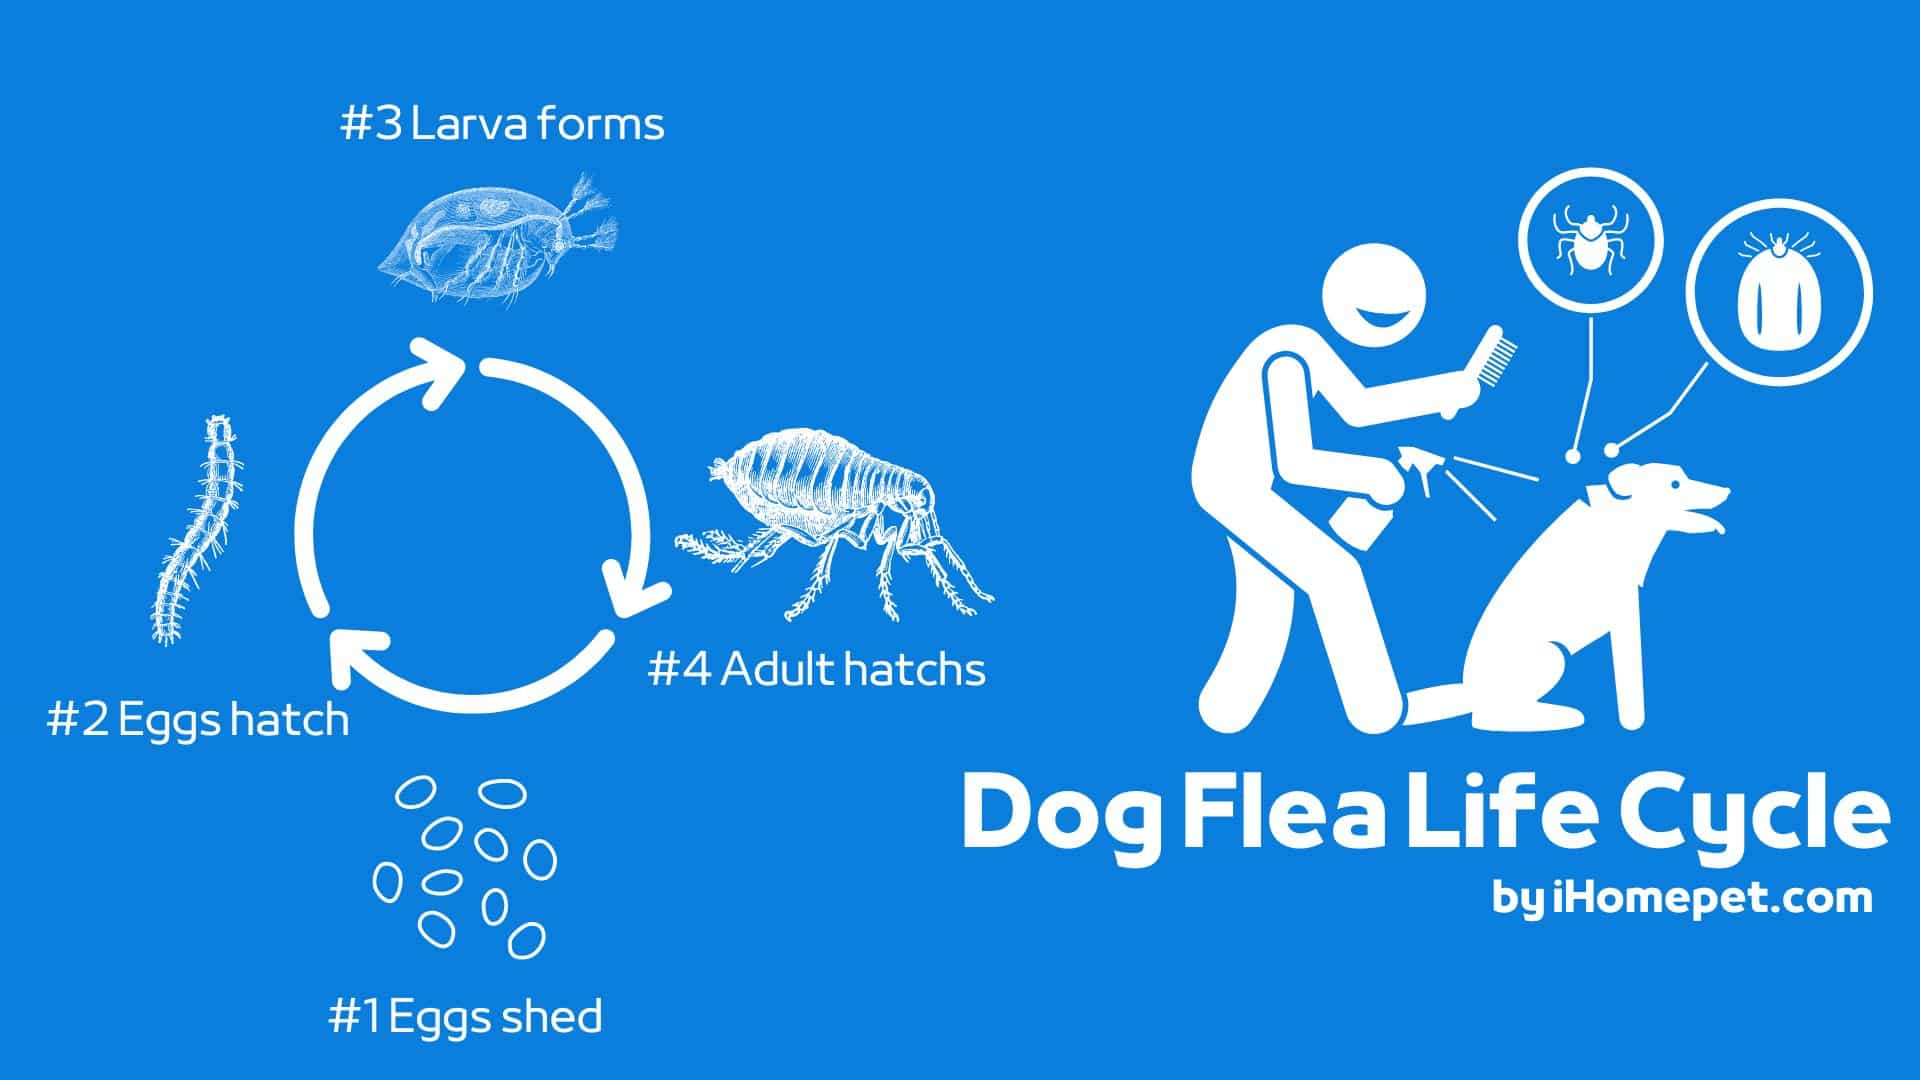 Dog Flea Life cyle